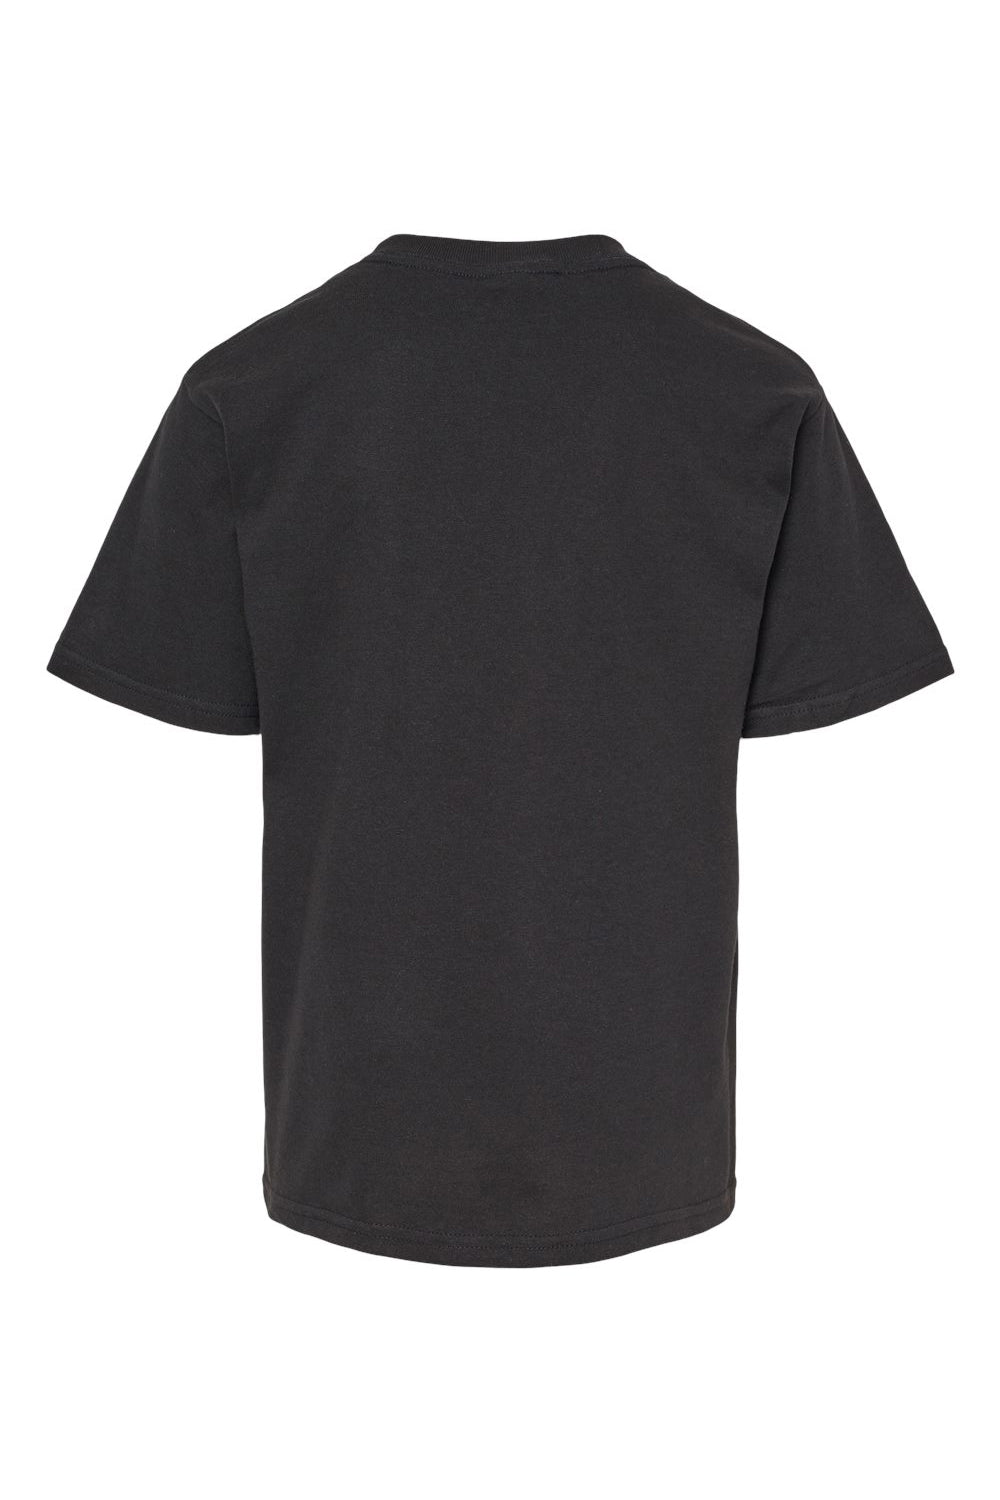 M&O 4850 Youth Gold Soft Touch Short Sleeve Crewneck T-Shirt Black Flat Back